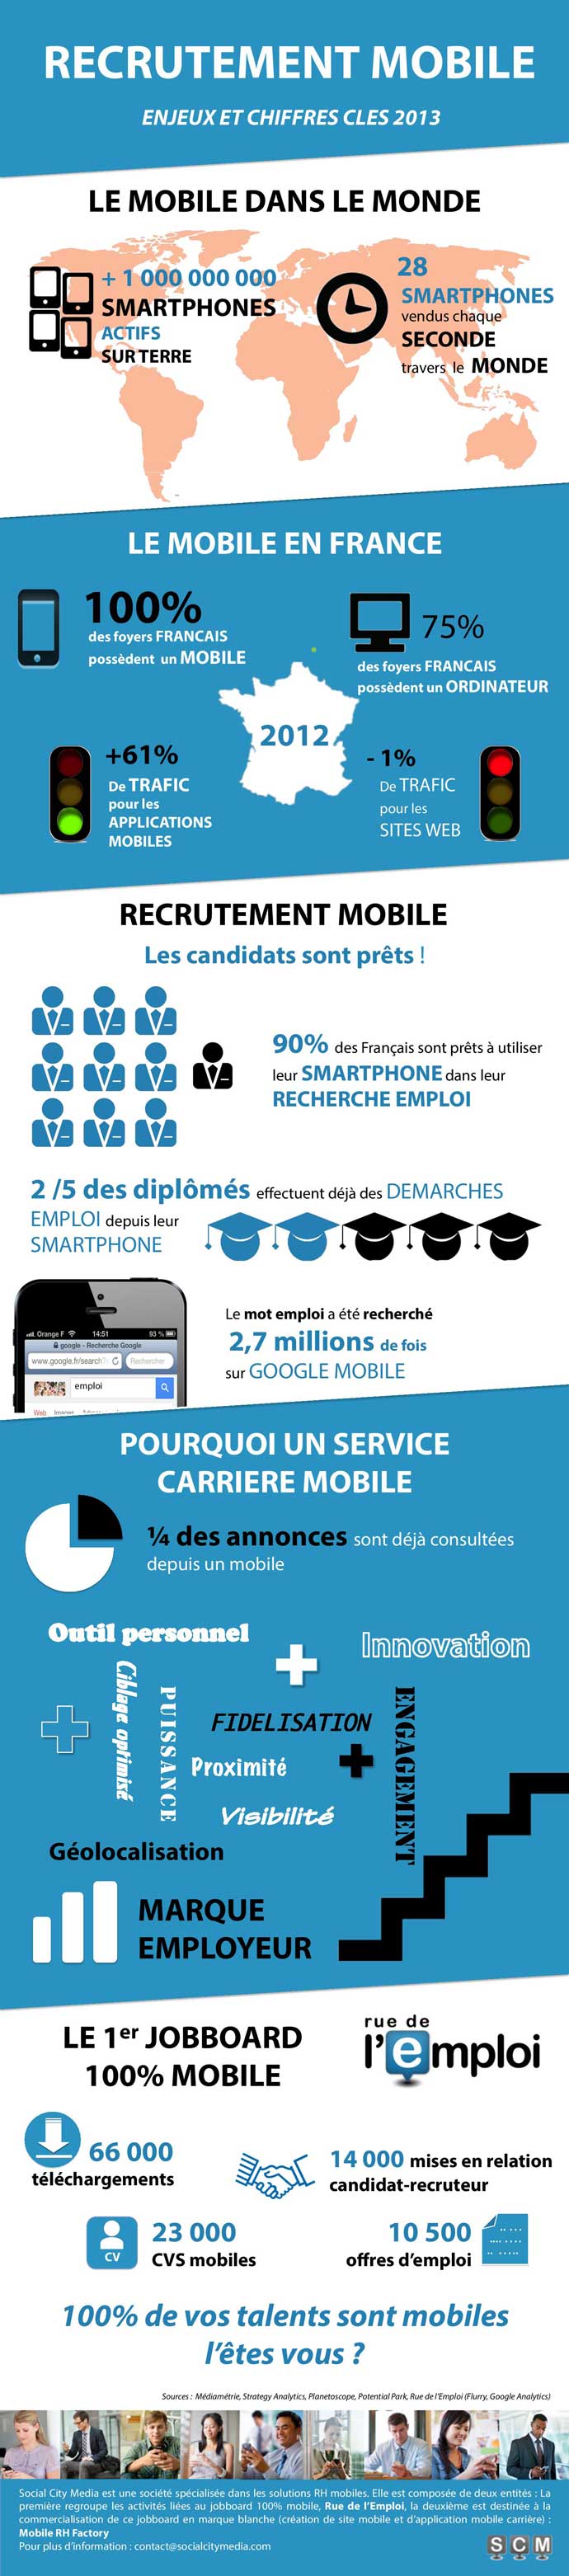 Infographie Recrutement Mobile Mars 2013 (Rue de l'emploi)